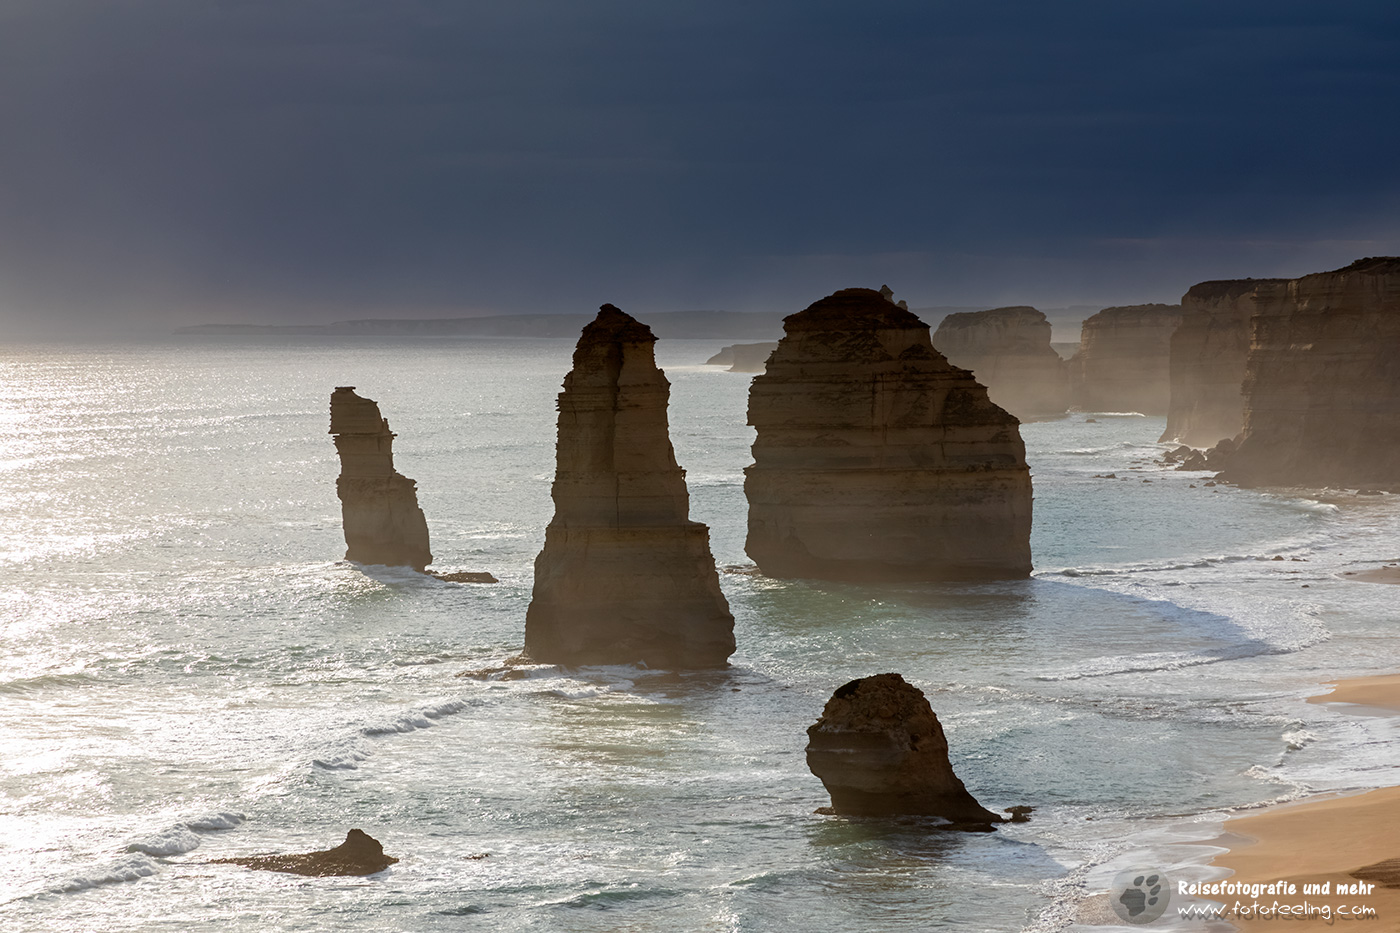 Unwetterfront hinter den Zwölf Aposteln (Twelve Apostles), Great Ocean Road, Victoria, Australien